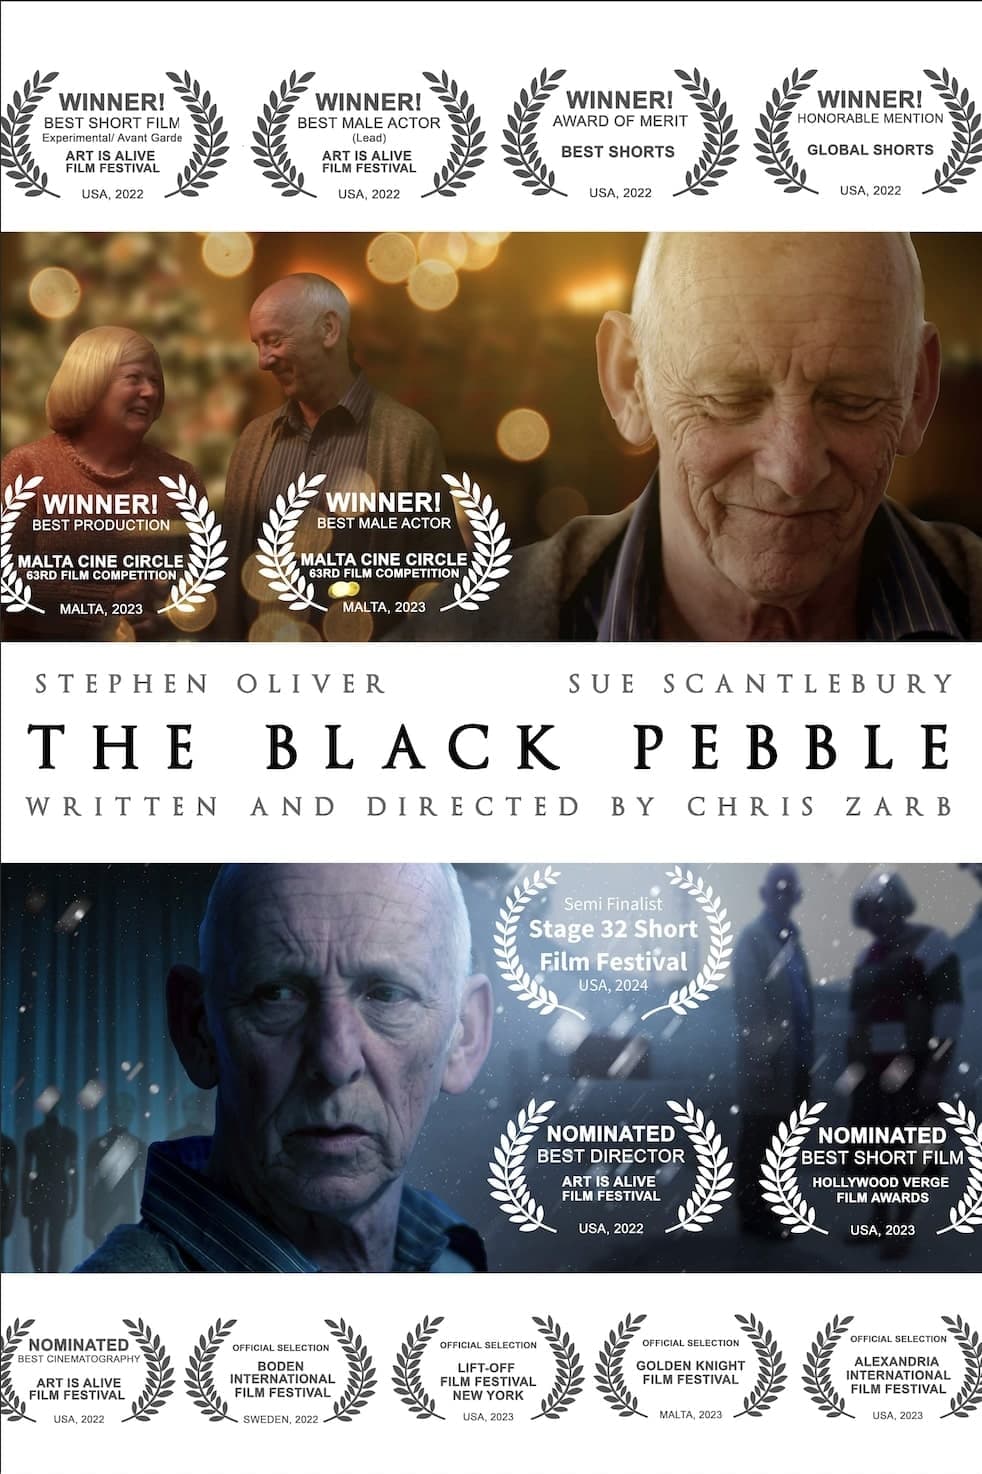 The Black Pebble